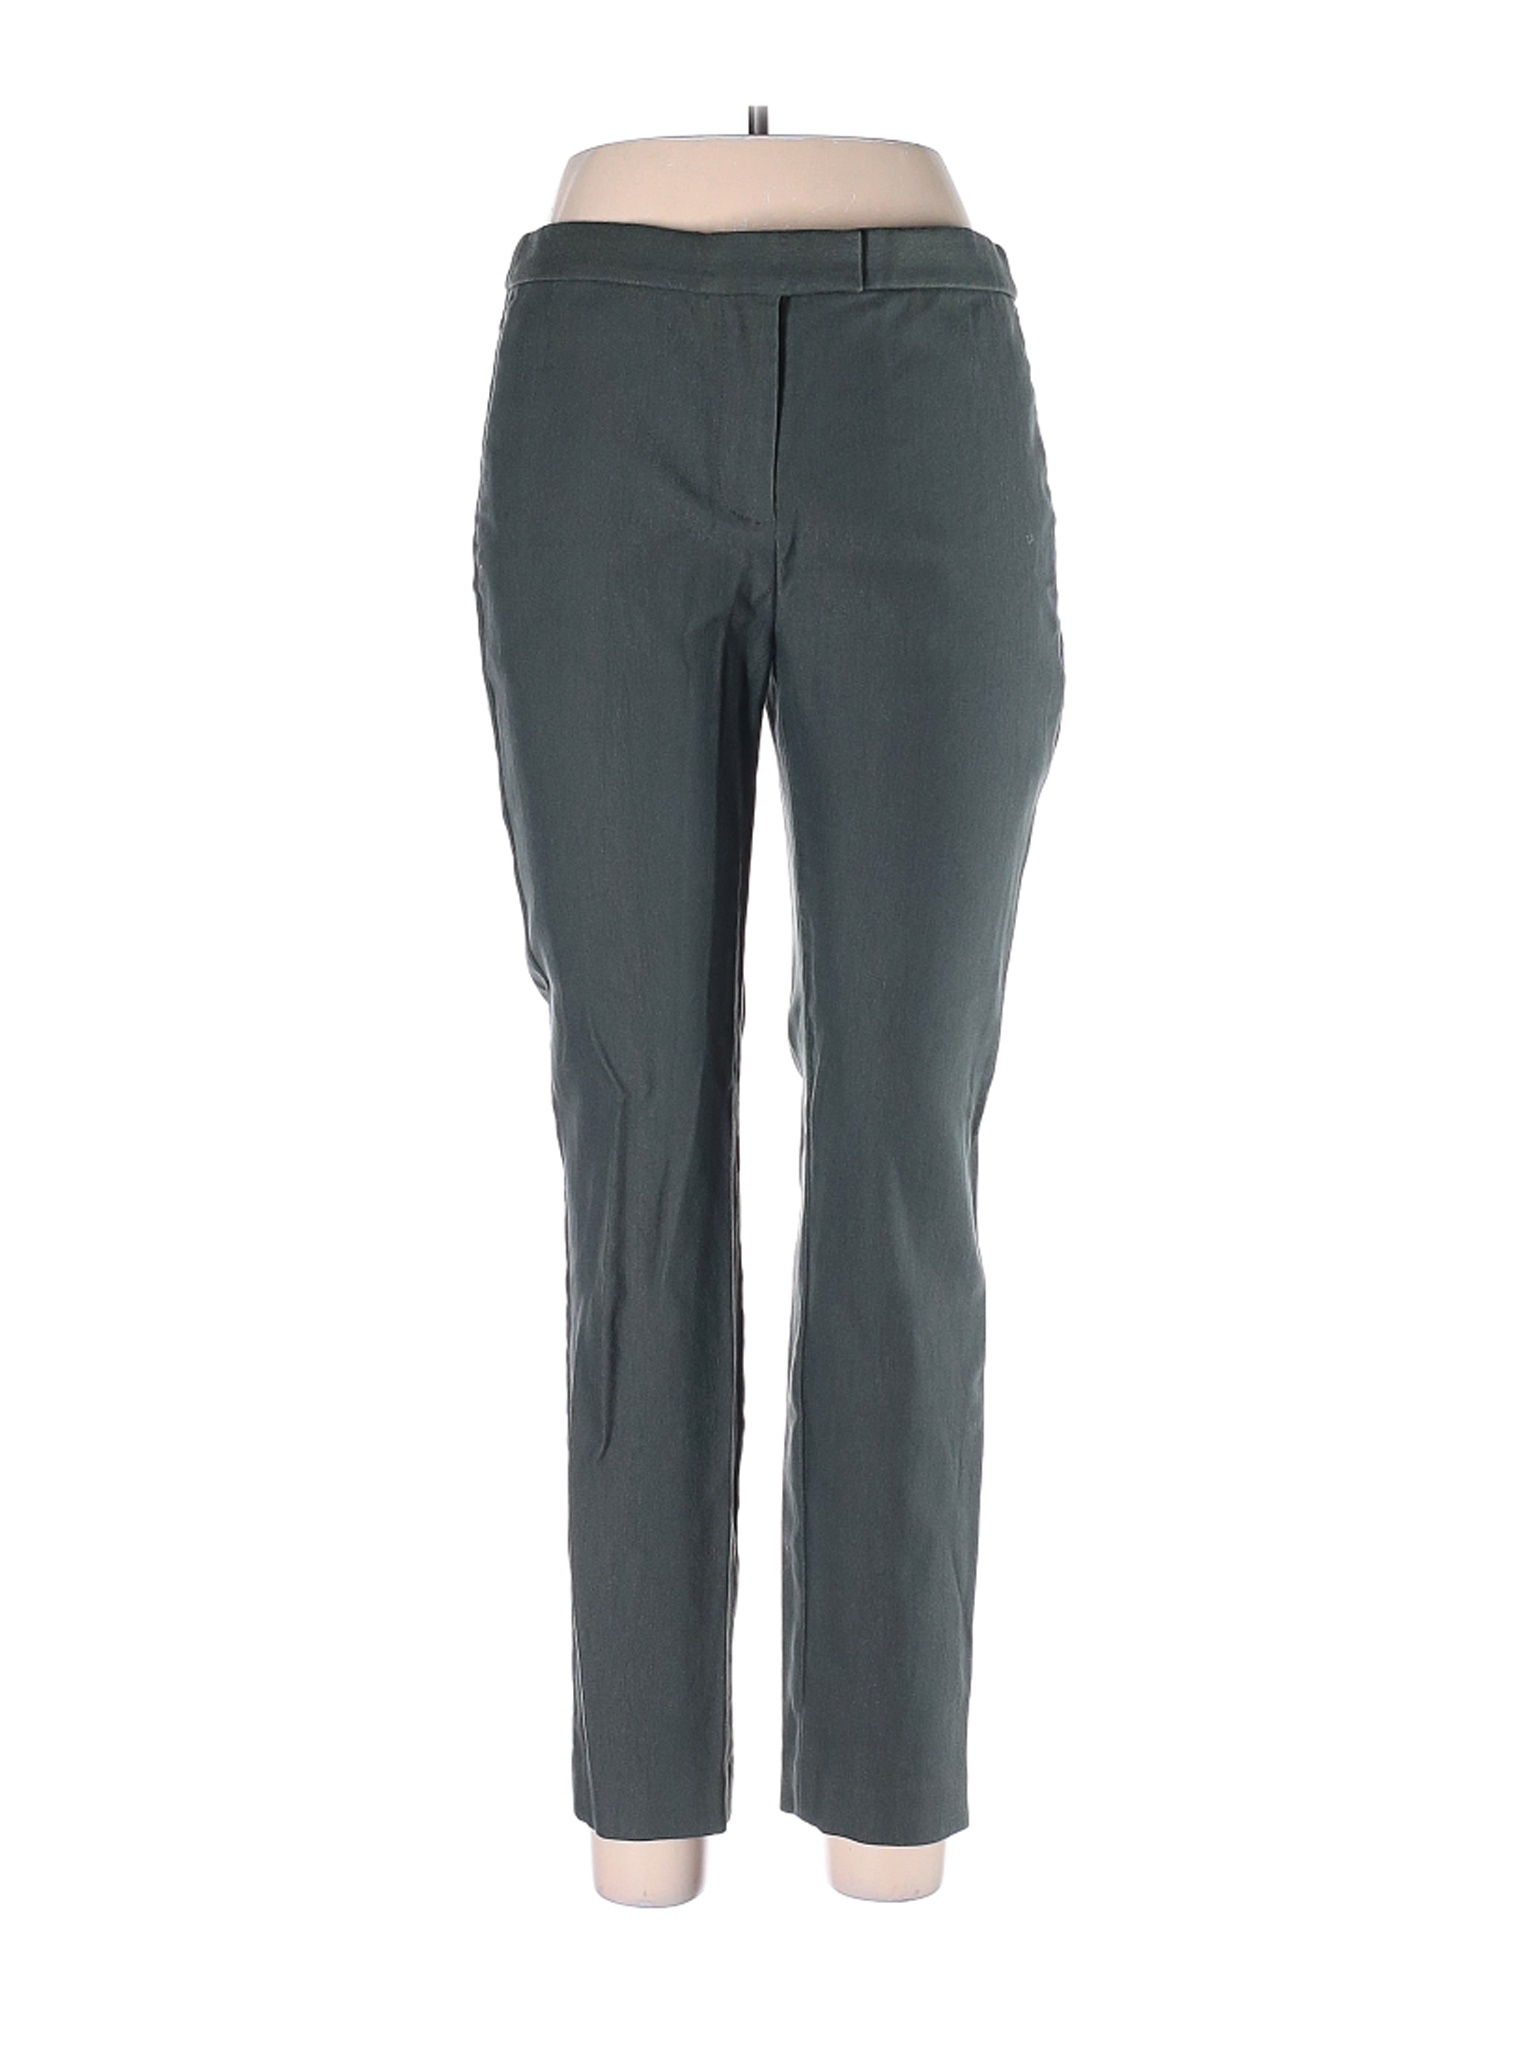 J.Crew Women Green Casual Pants 10 | eBay